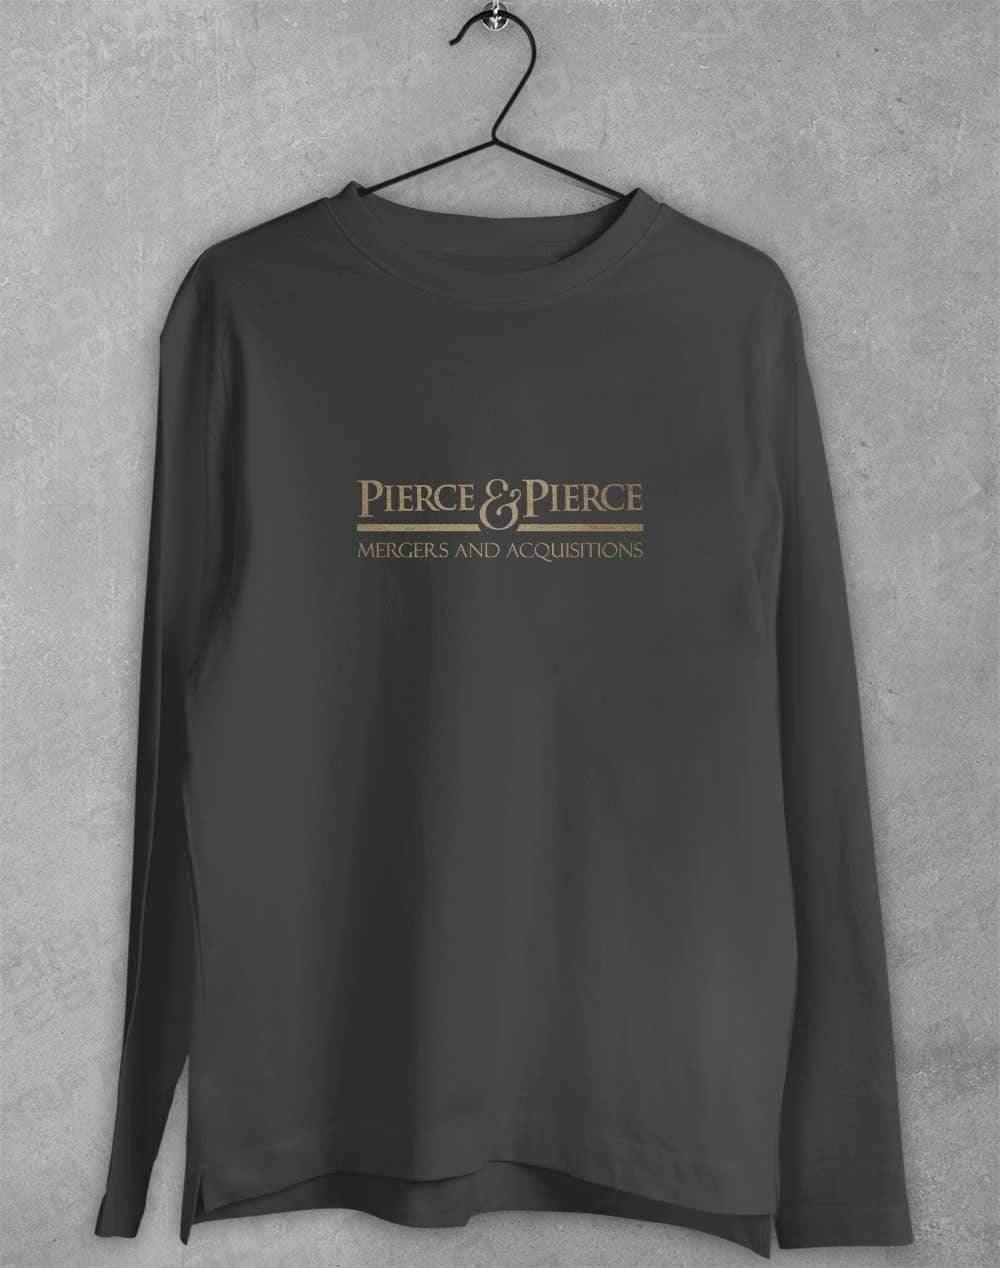 Pierce and Pierce Long Sleeve T-Shirt S / Charcoal  - Off World Tees